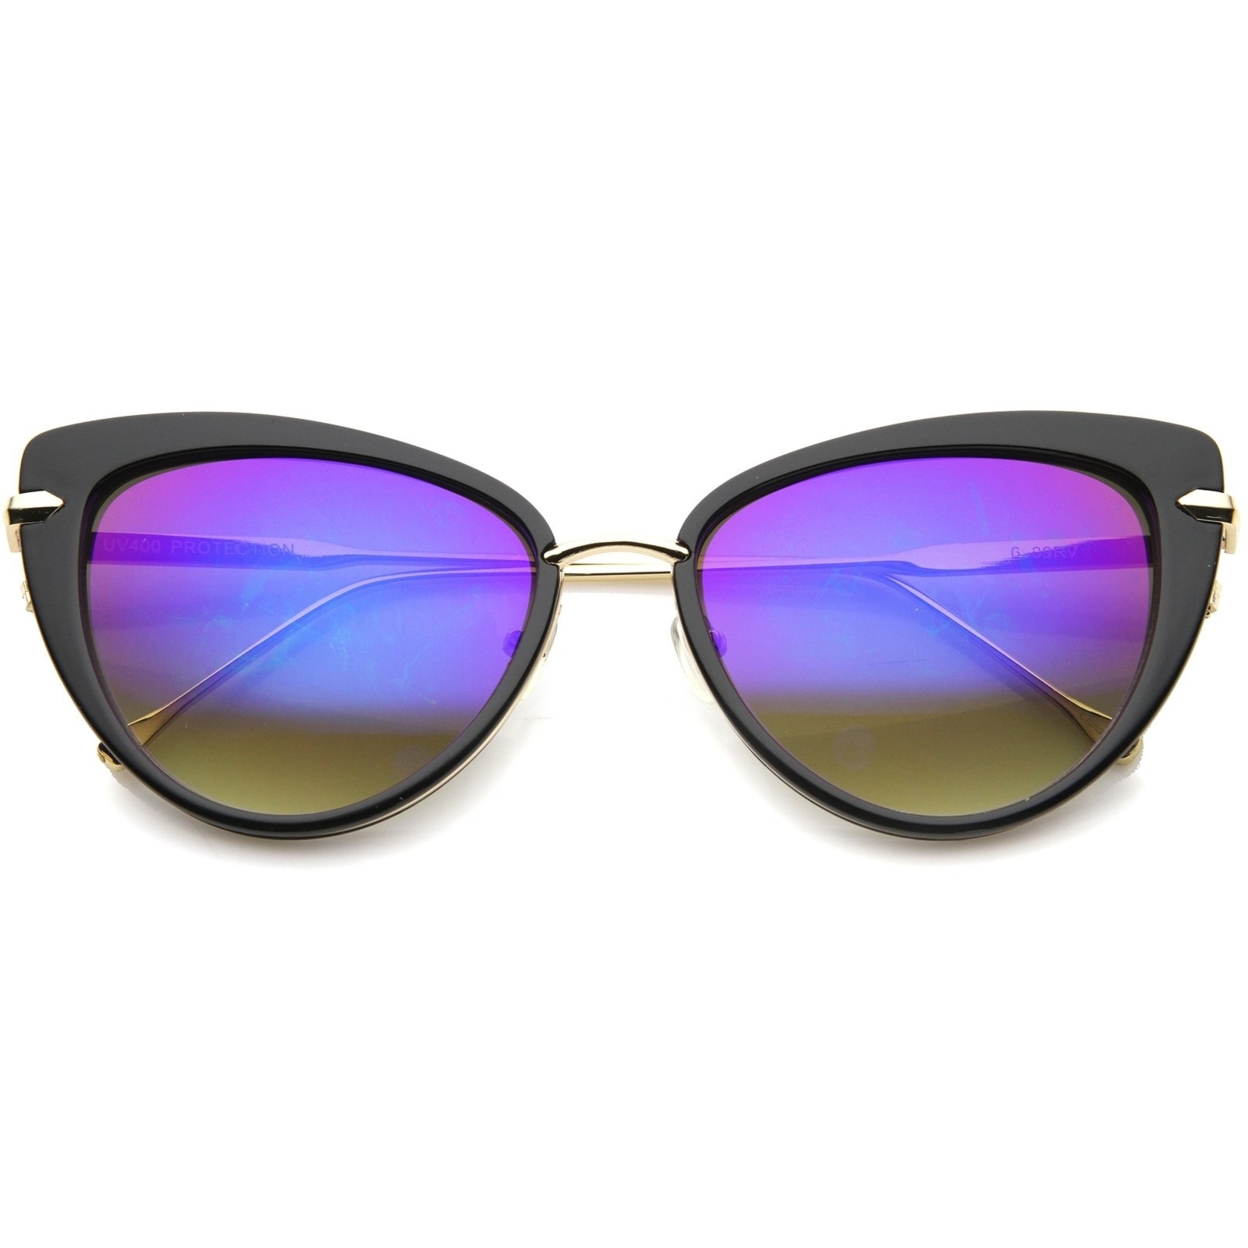 Women's High Fashion Metal Temple Super Cat Eye Sunglasses 55mm - Tortoise-Gold / Pink Yellow Mirror